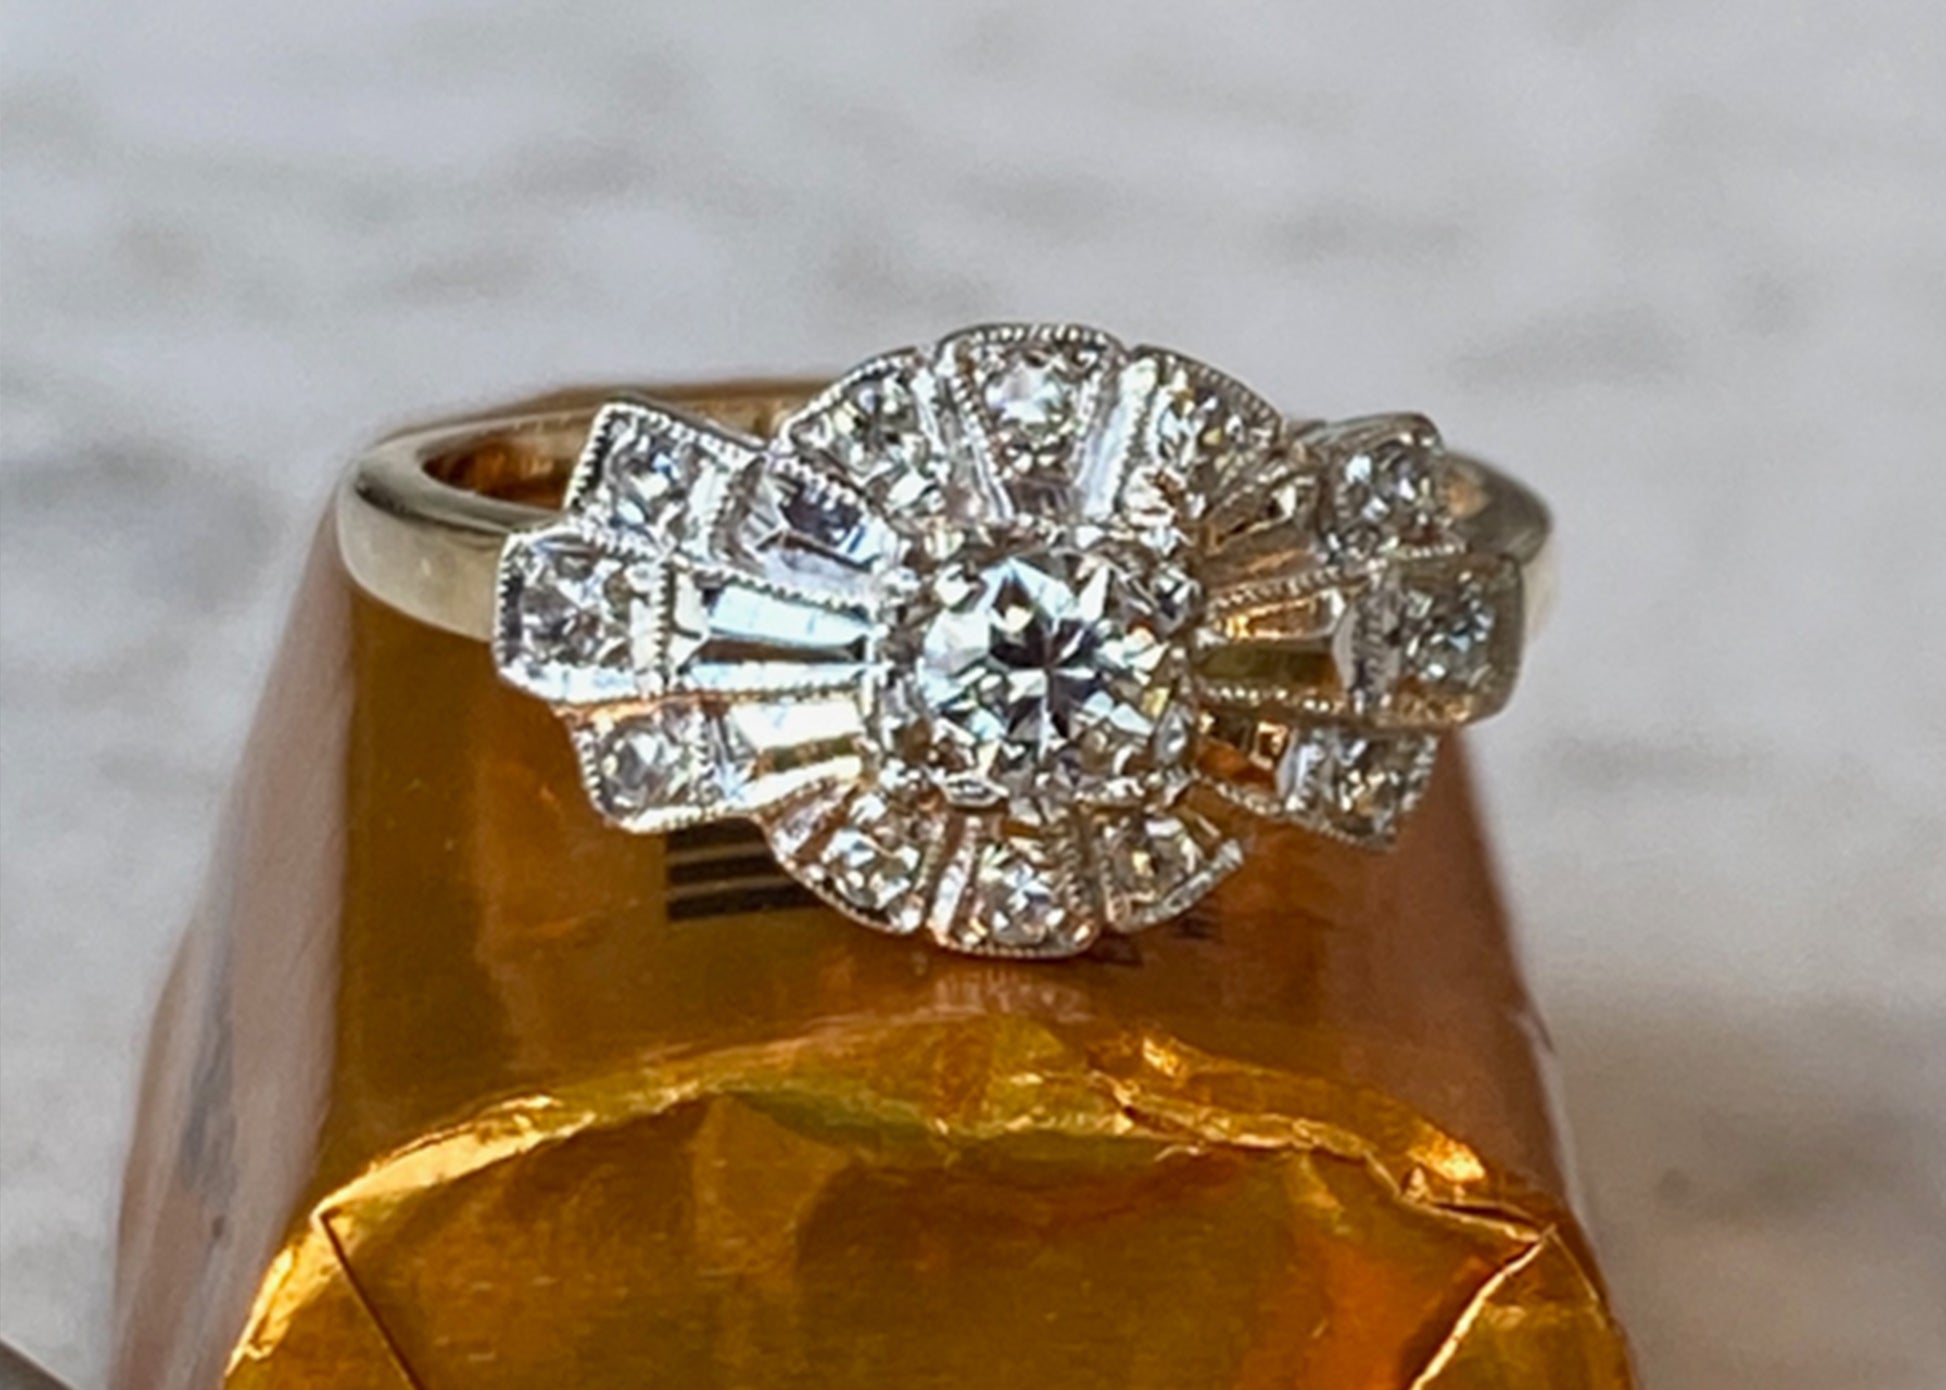 Vintage Retro Cluster Diamond Engagement Ring in 14k